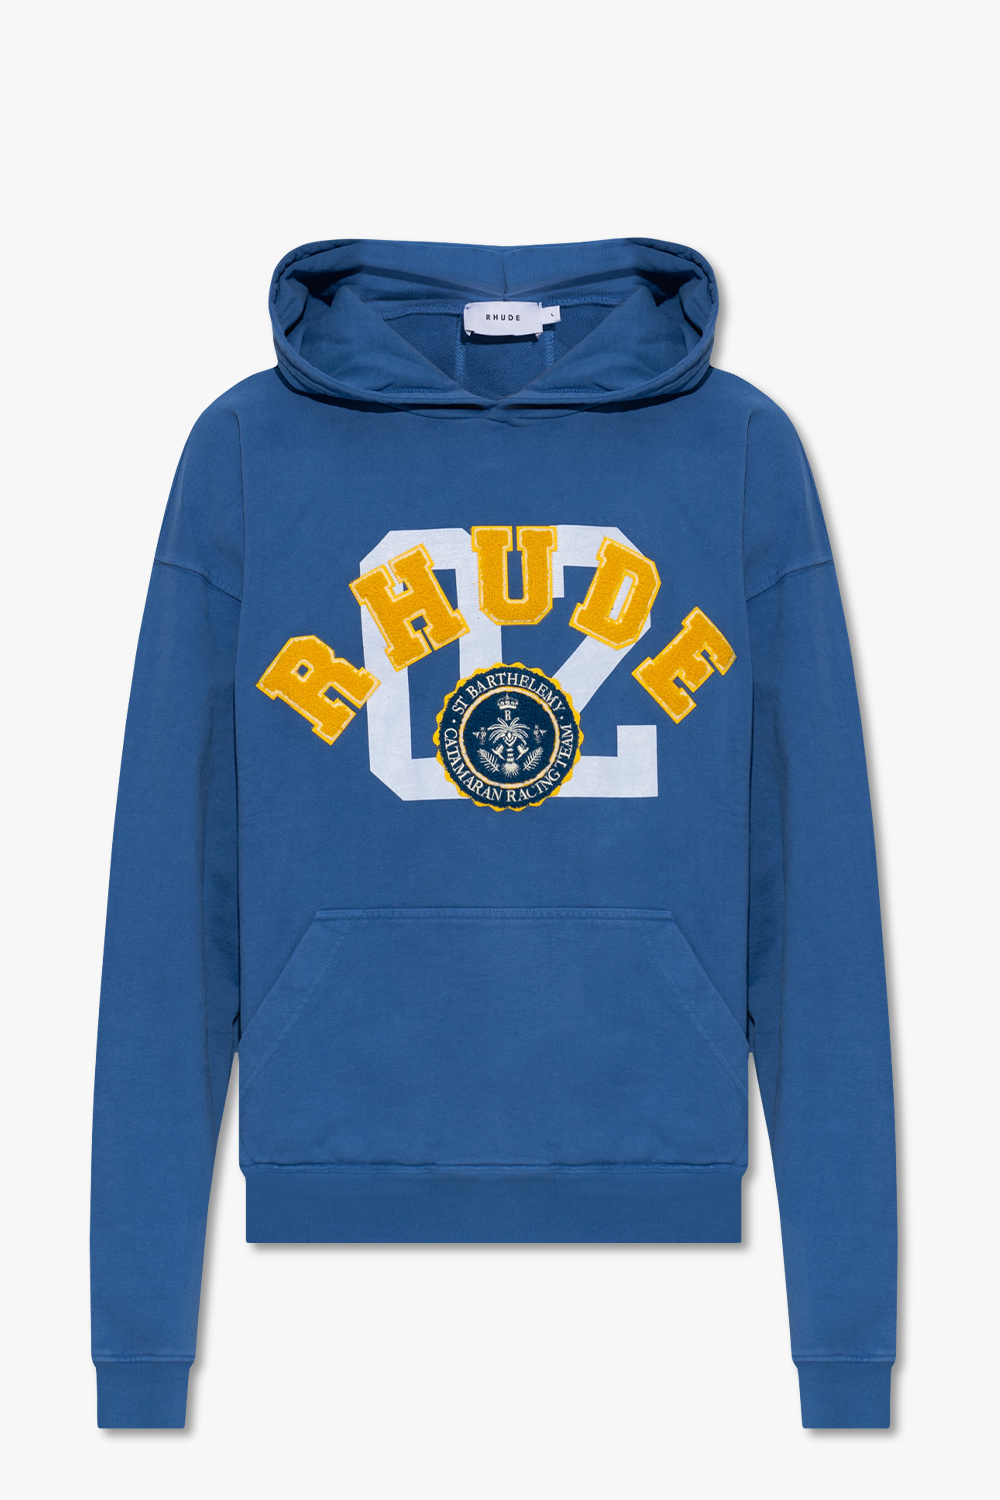 Australia jacket Space logo Rhude bomber - Nylon jersey GenesinlifeShops Blue - hoodie Plein embroidered